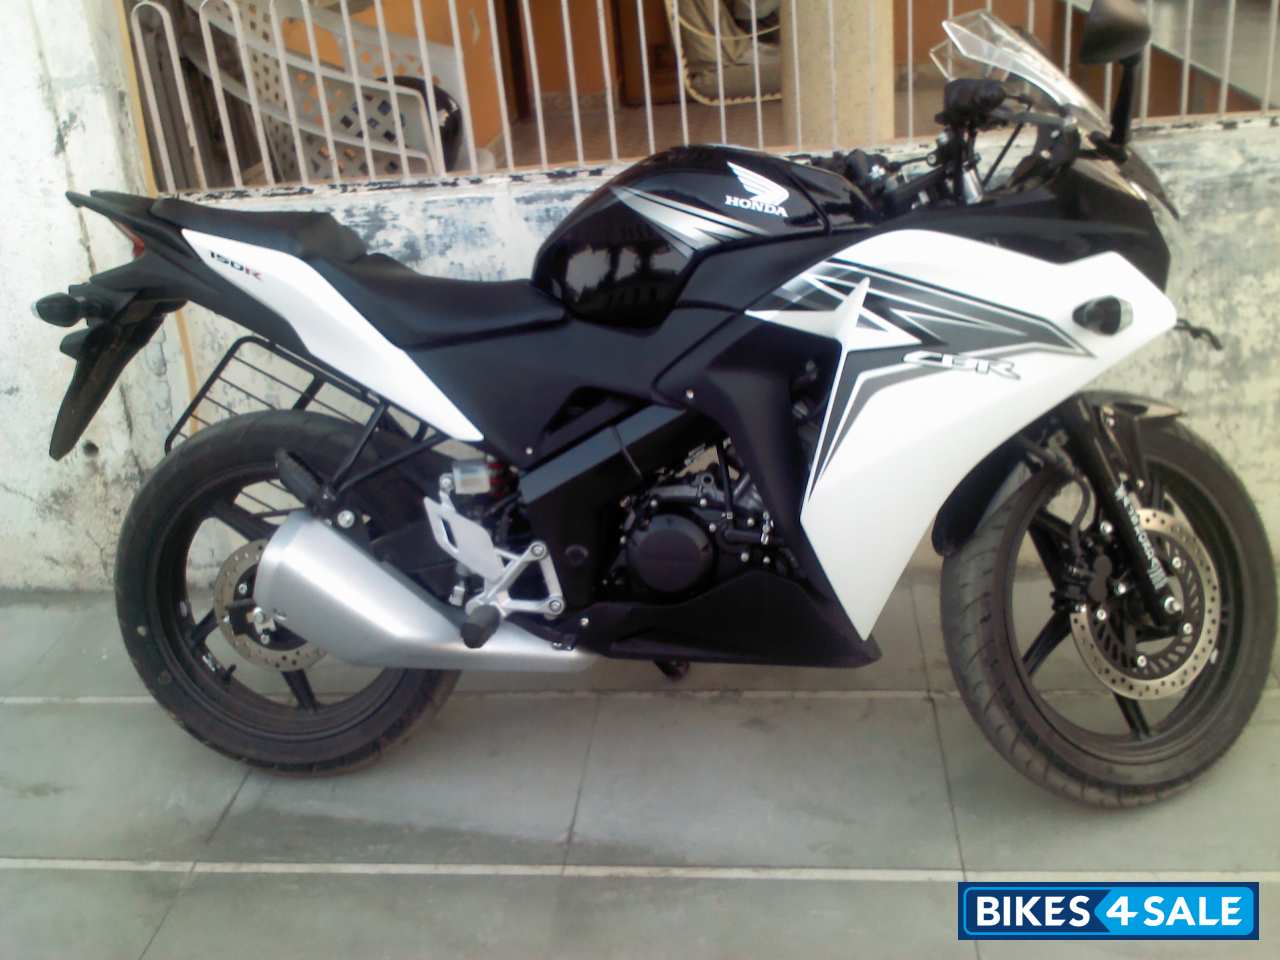 Black & White Honda CBR 150R Picture 1. Bike ID 102892. Bike located in ...